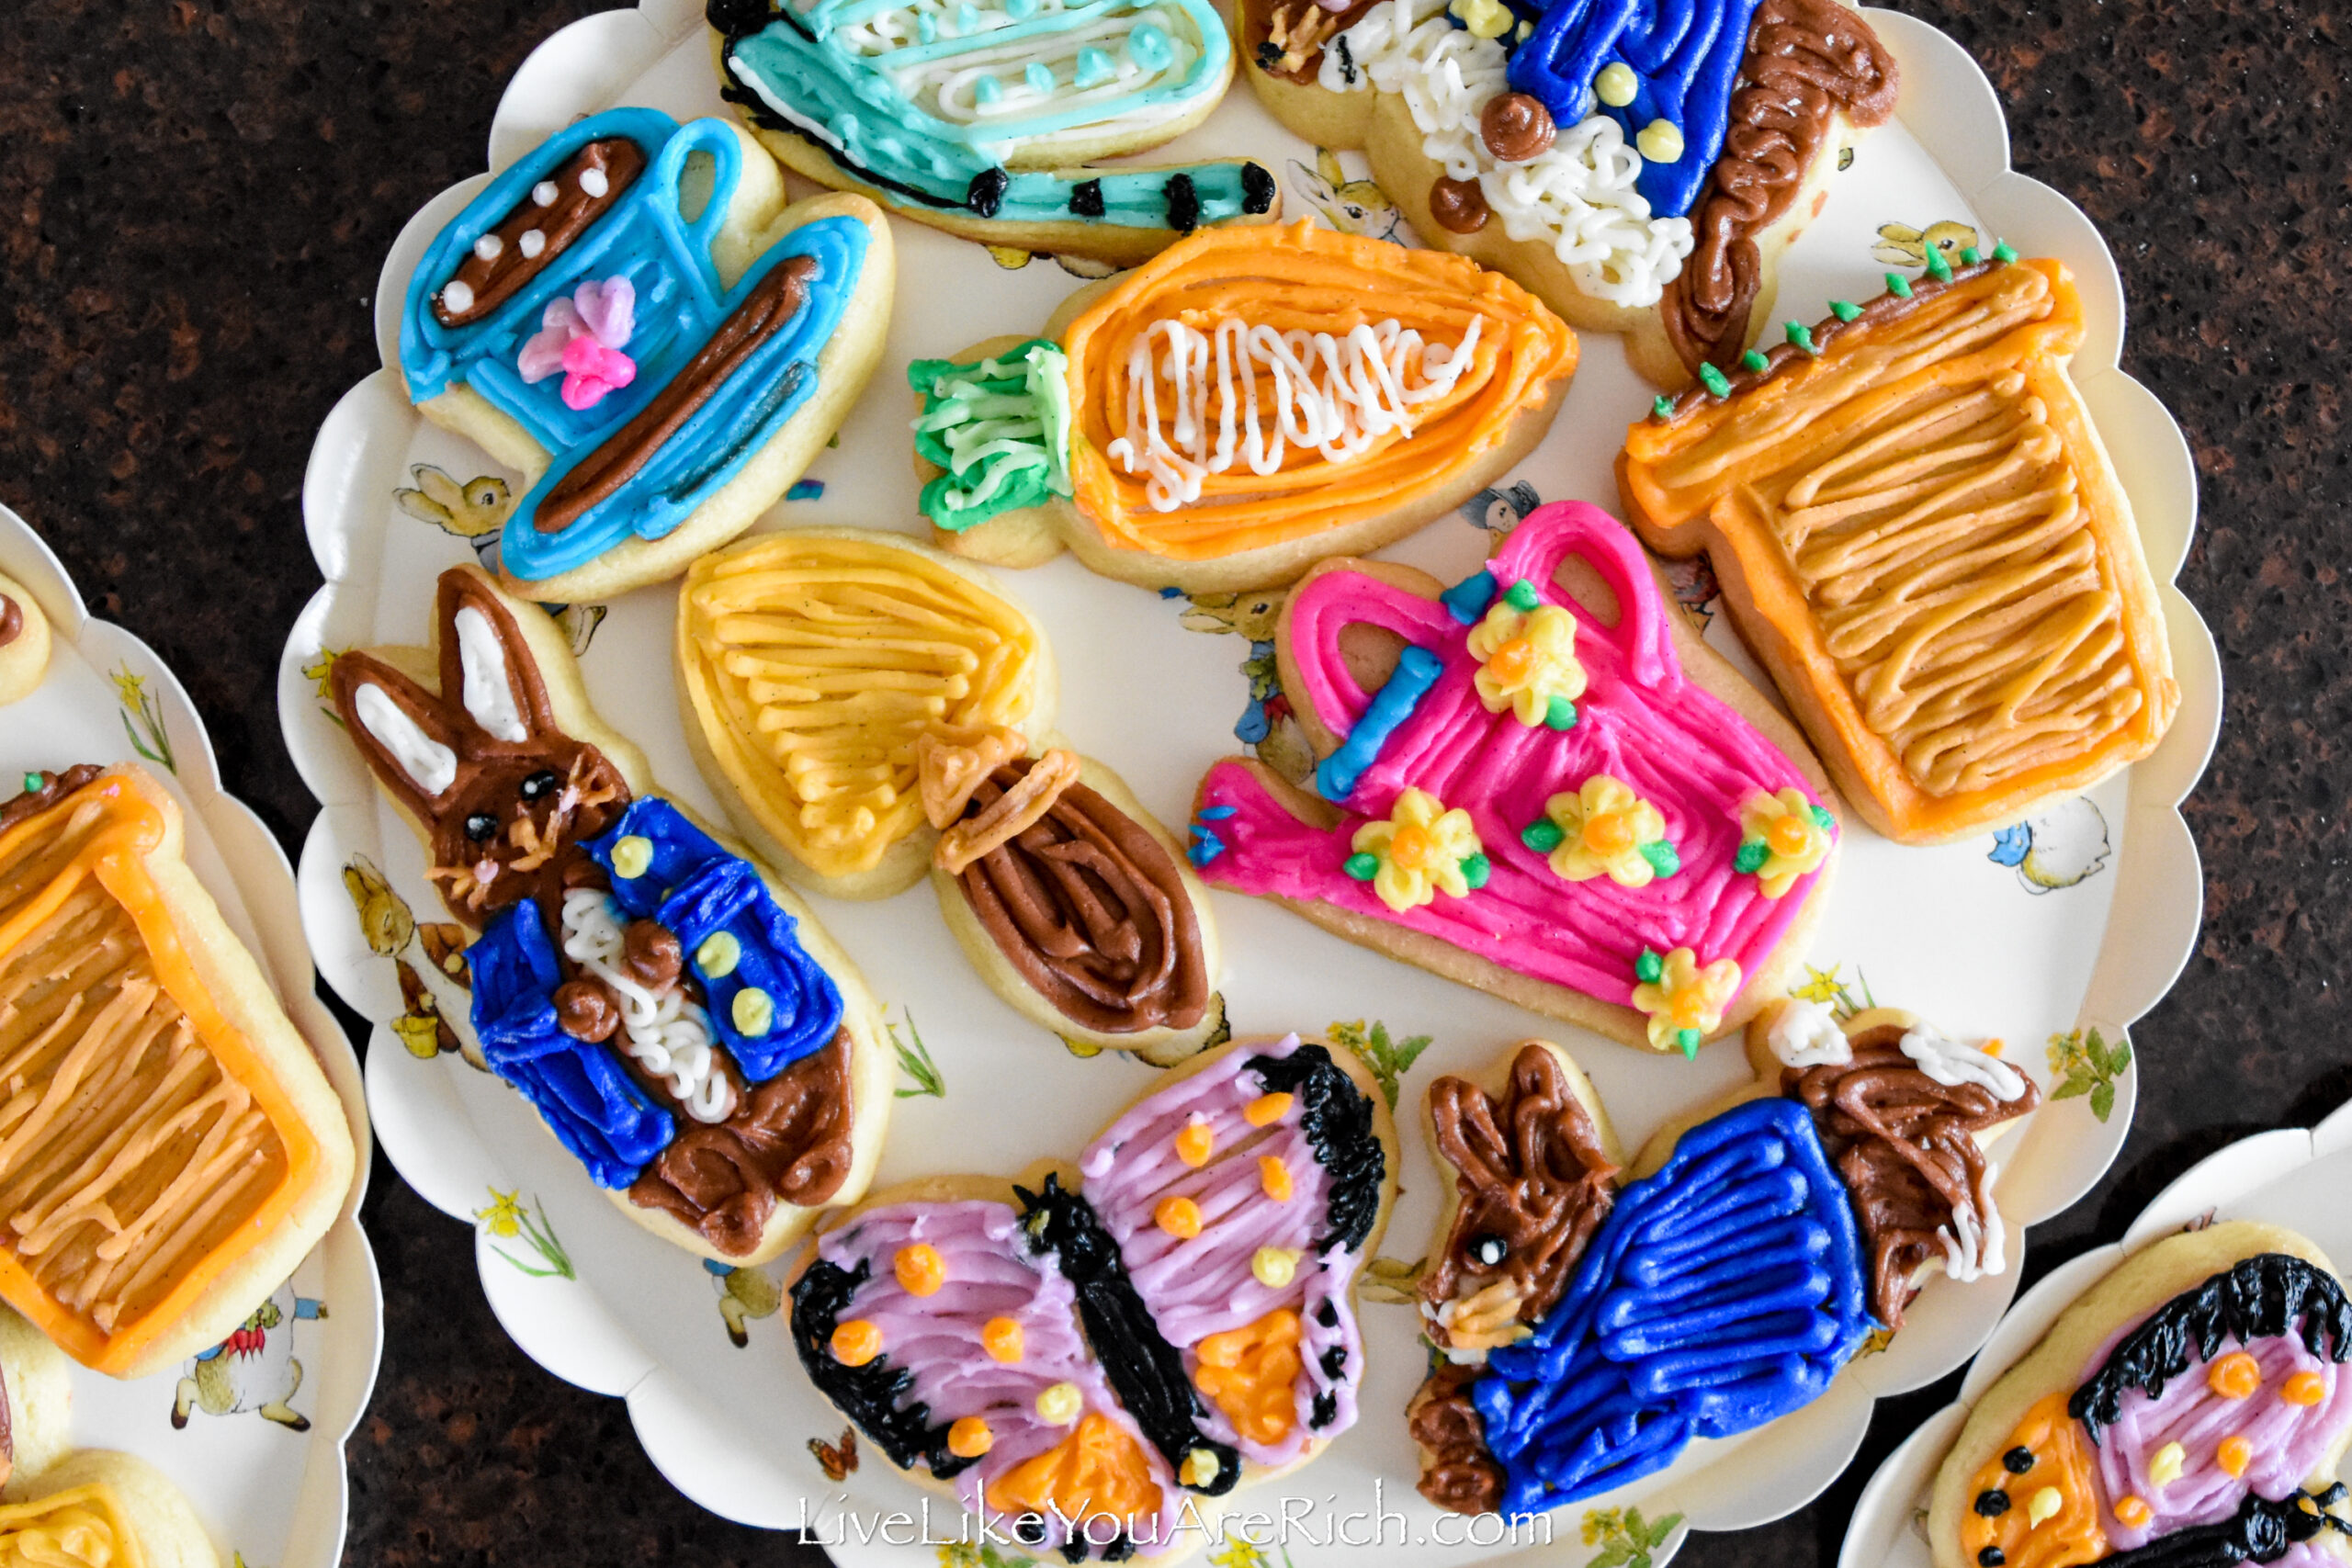 Peter Rabbit Detailed Sugar Cookies